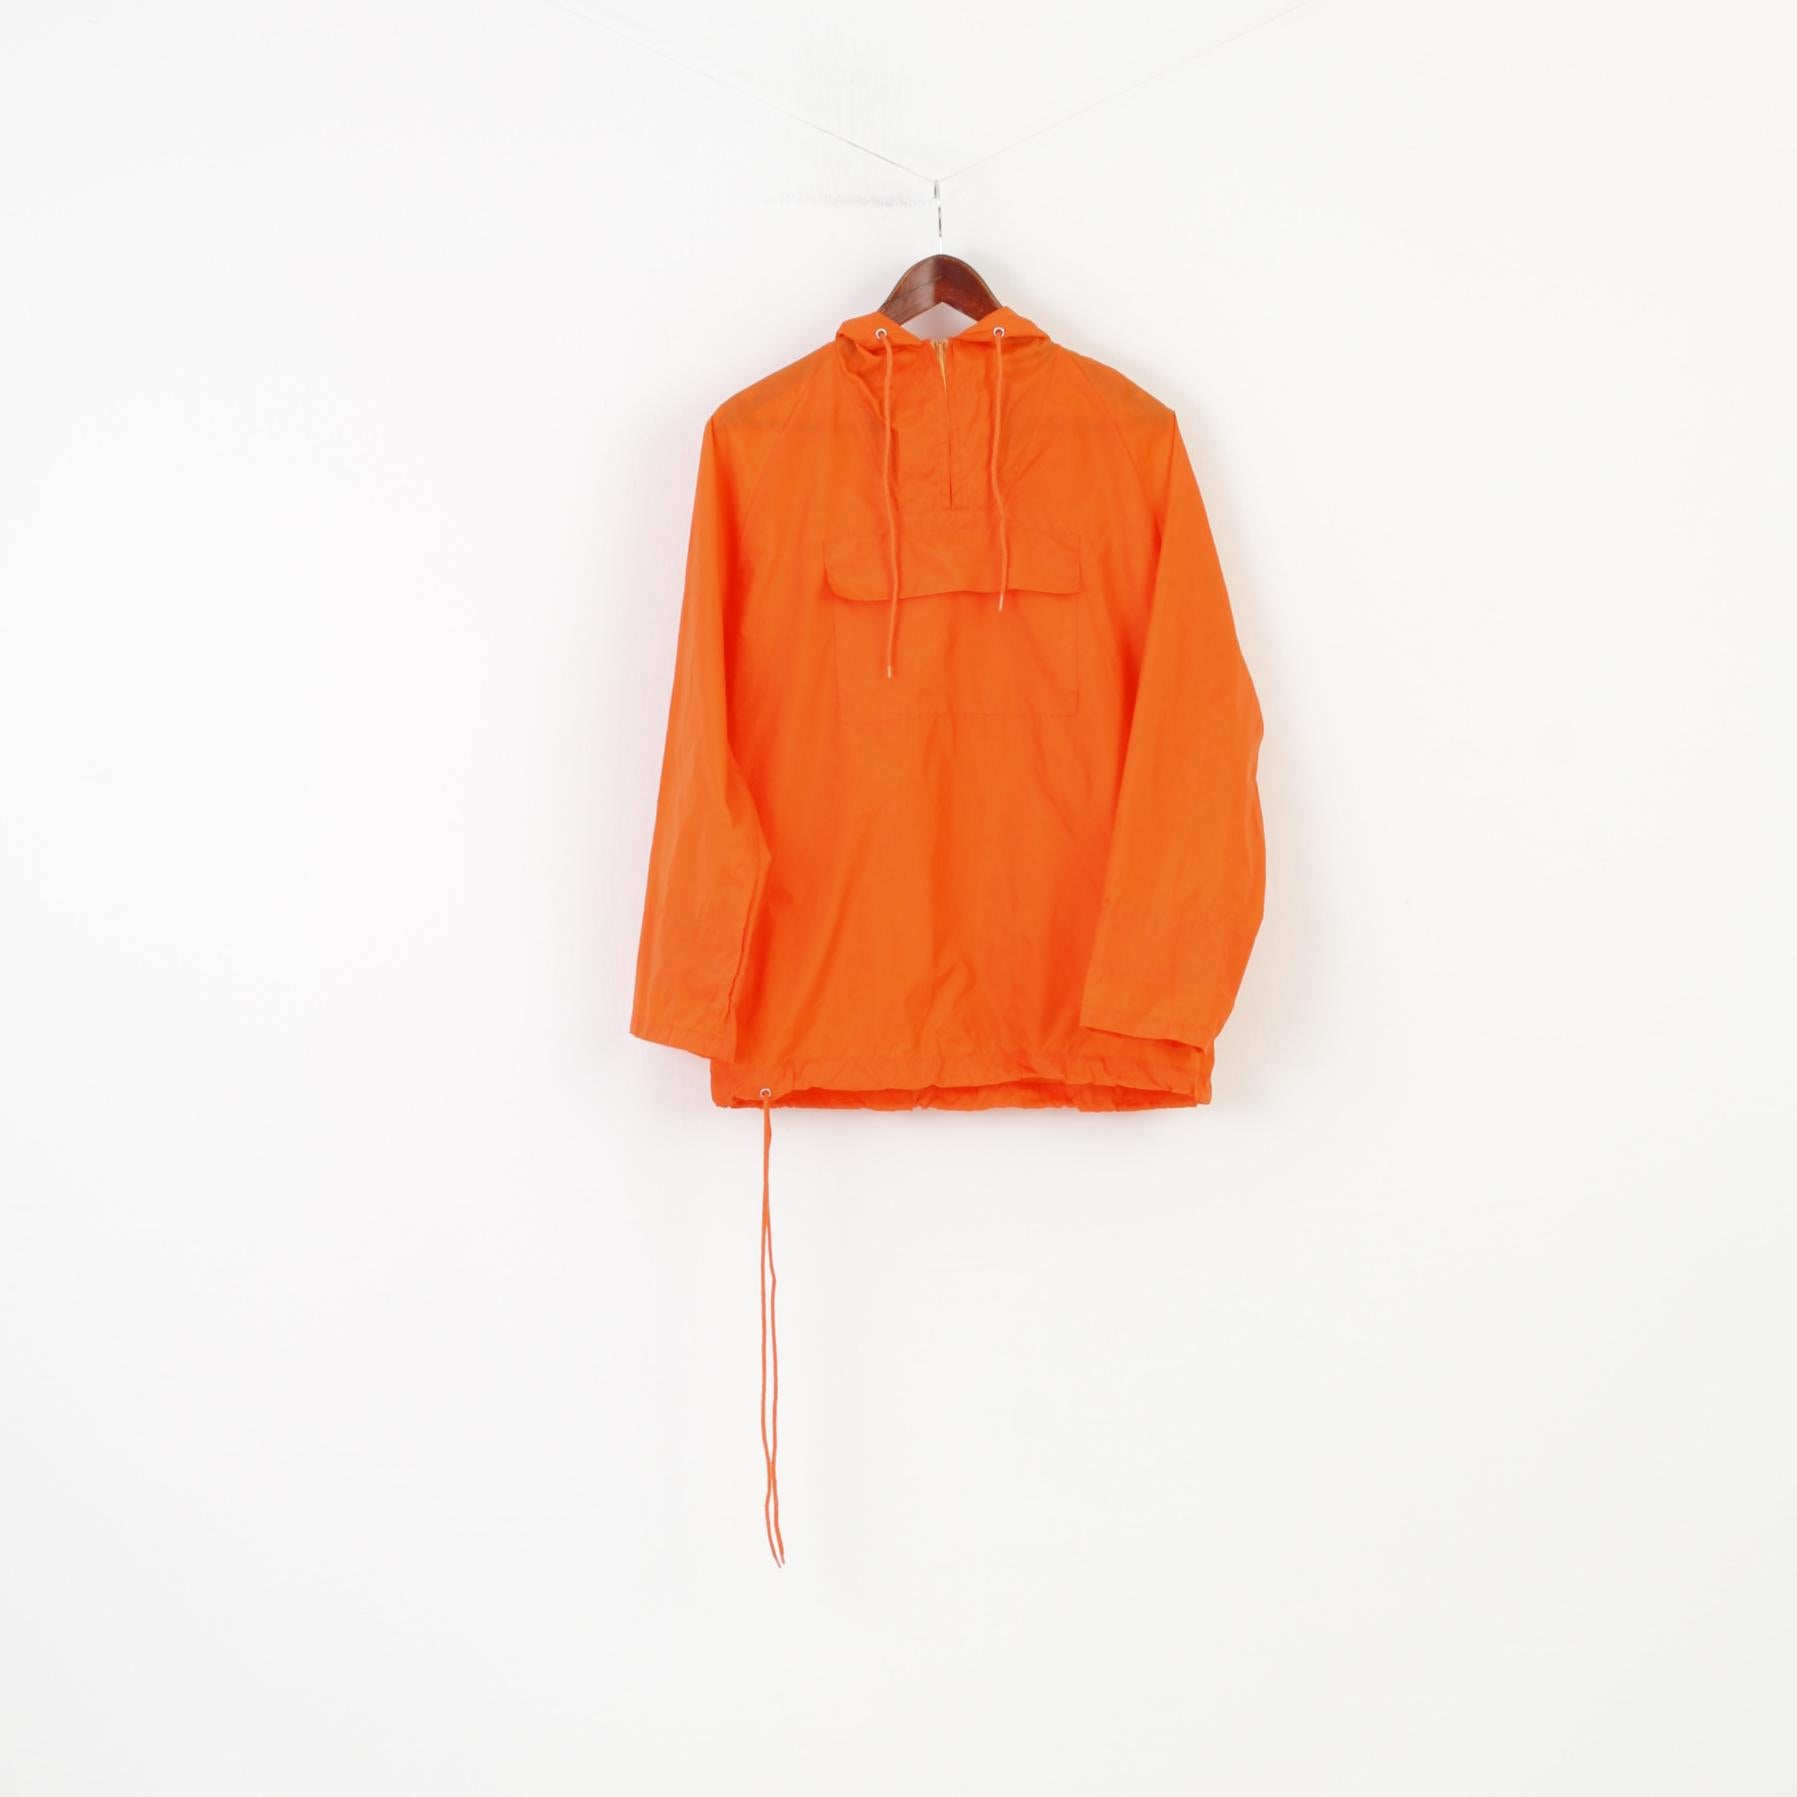 Klass Woman S Waterproof Jacket Orange Nylon Zip Neck Hood Pocket Outwear Top